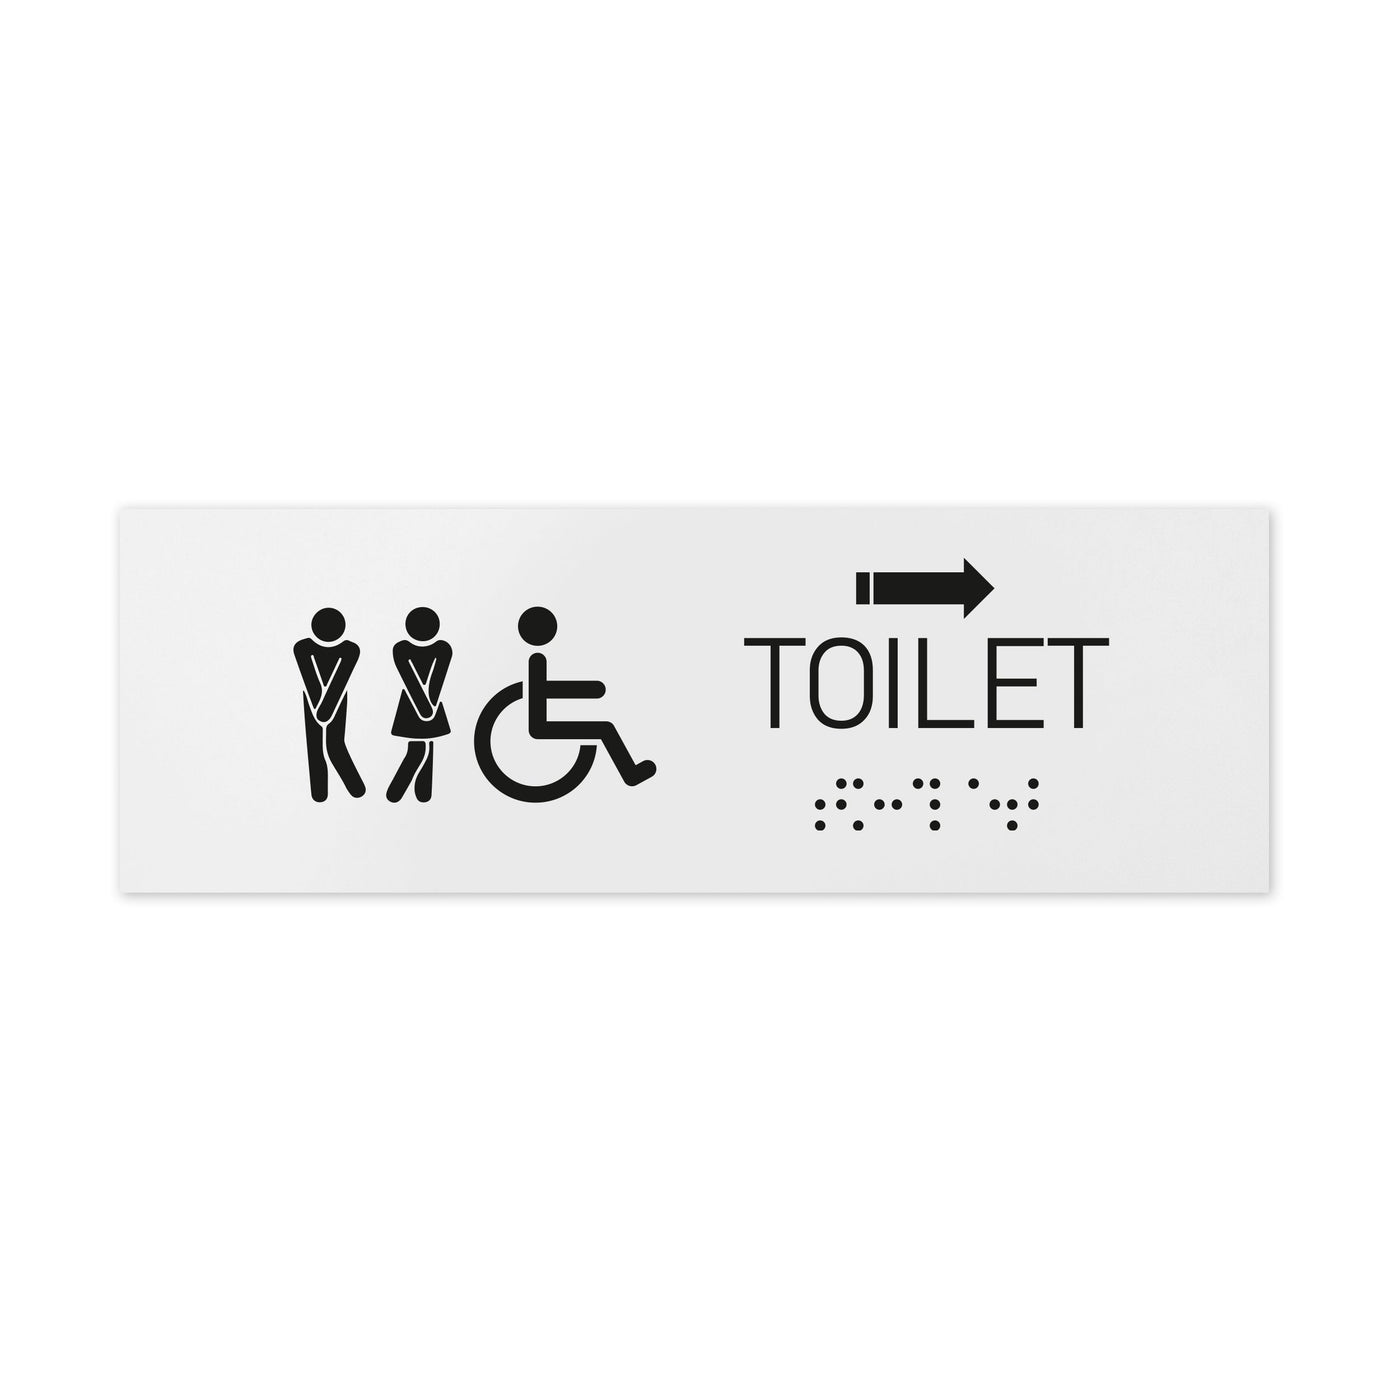 Bathroom Signs - Men & Women & Wheelchair Toilet ADA Signs With Braille - Milk Acrylic